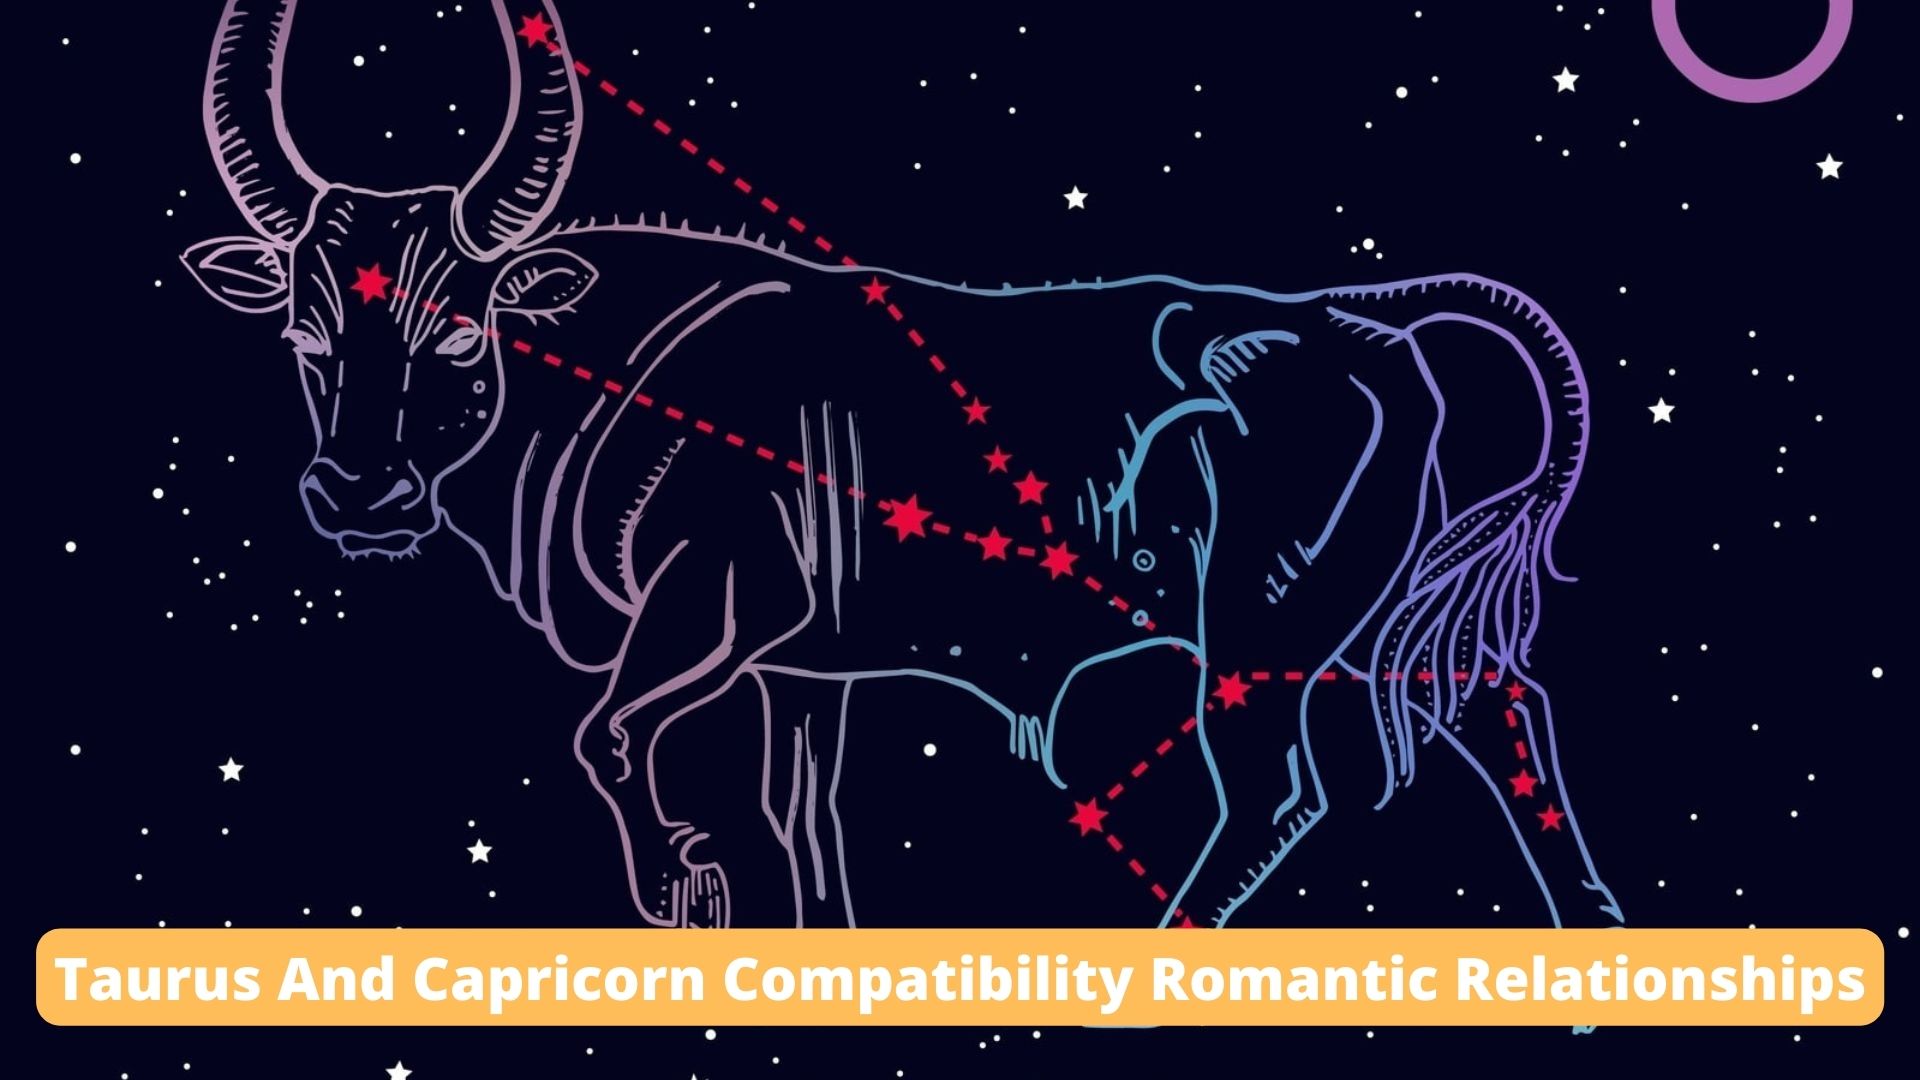 Taurus And Capricorn Compatibility - Romantic Relationships